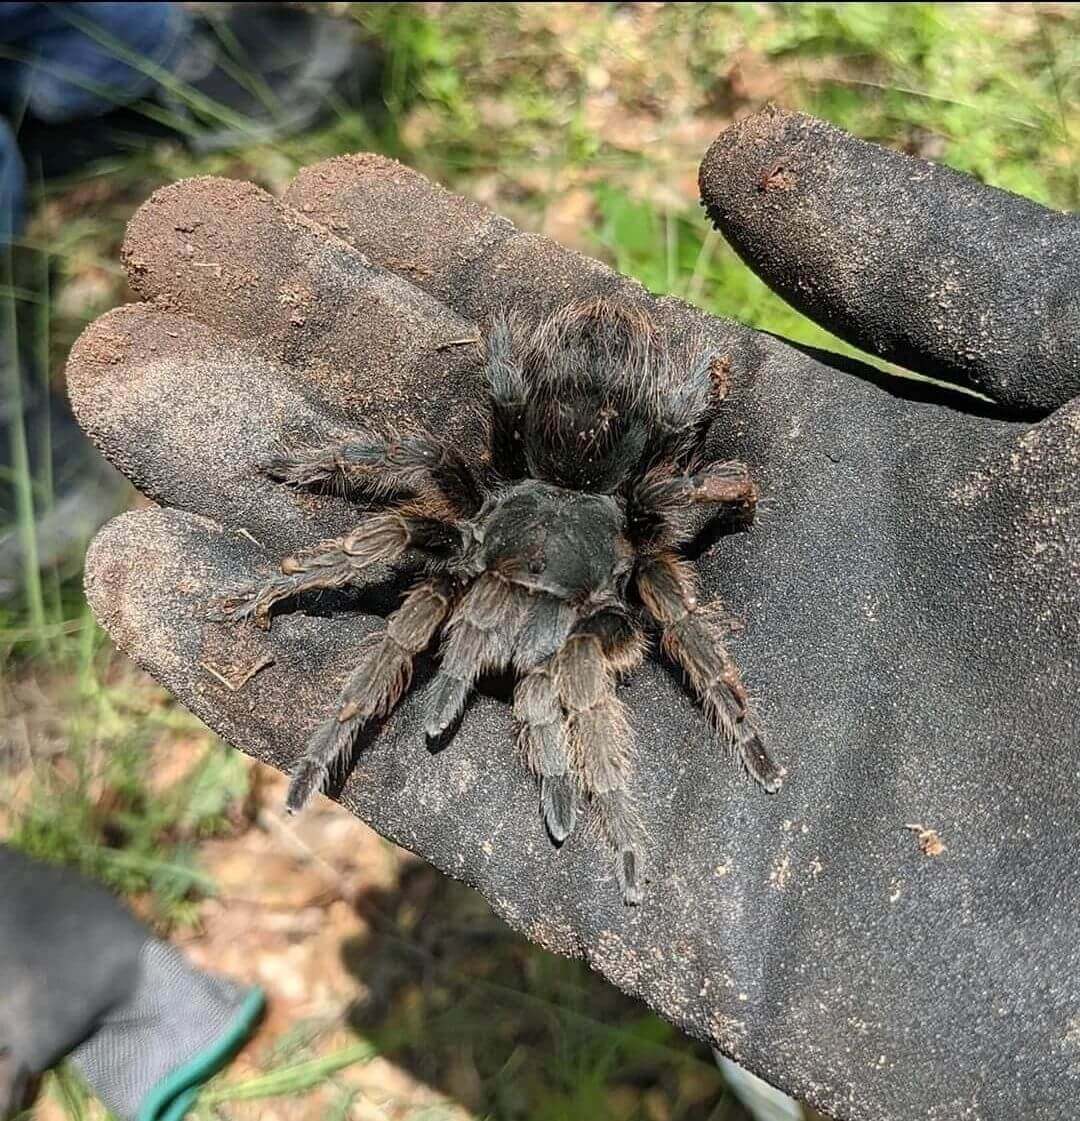 a spider being held on a pair of dark gloves 